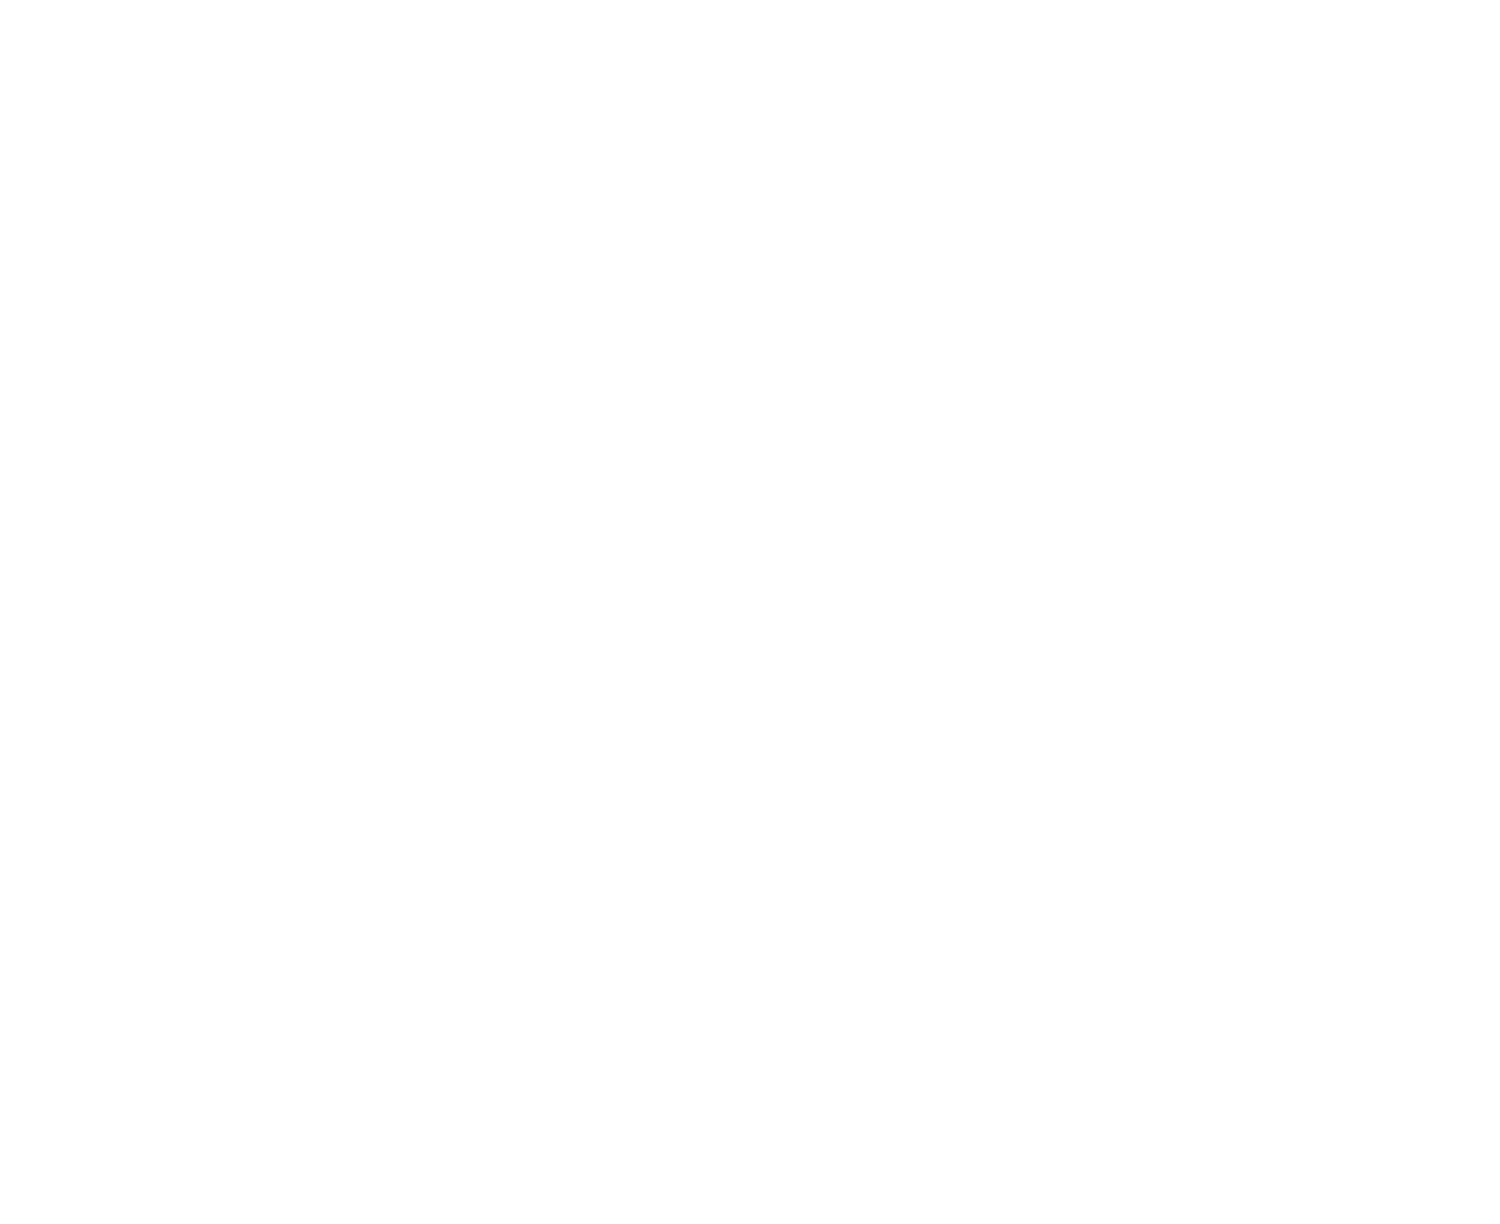 Mountaineer Roasting Company